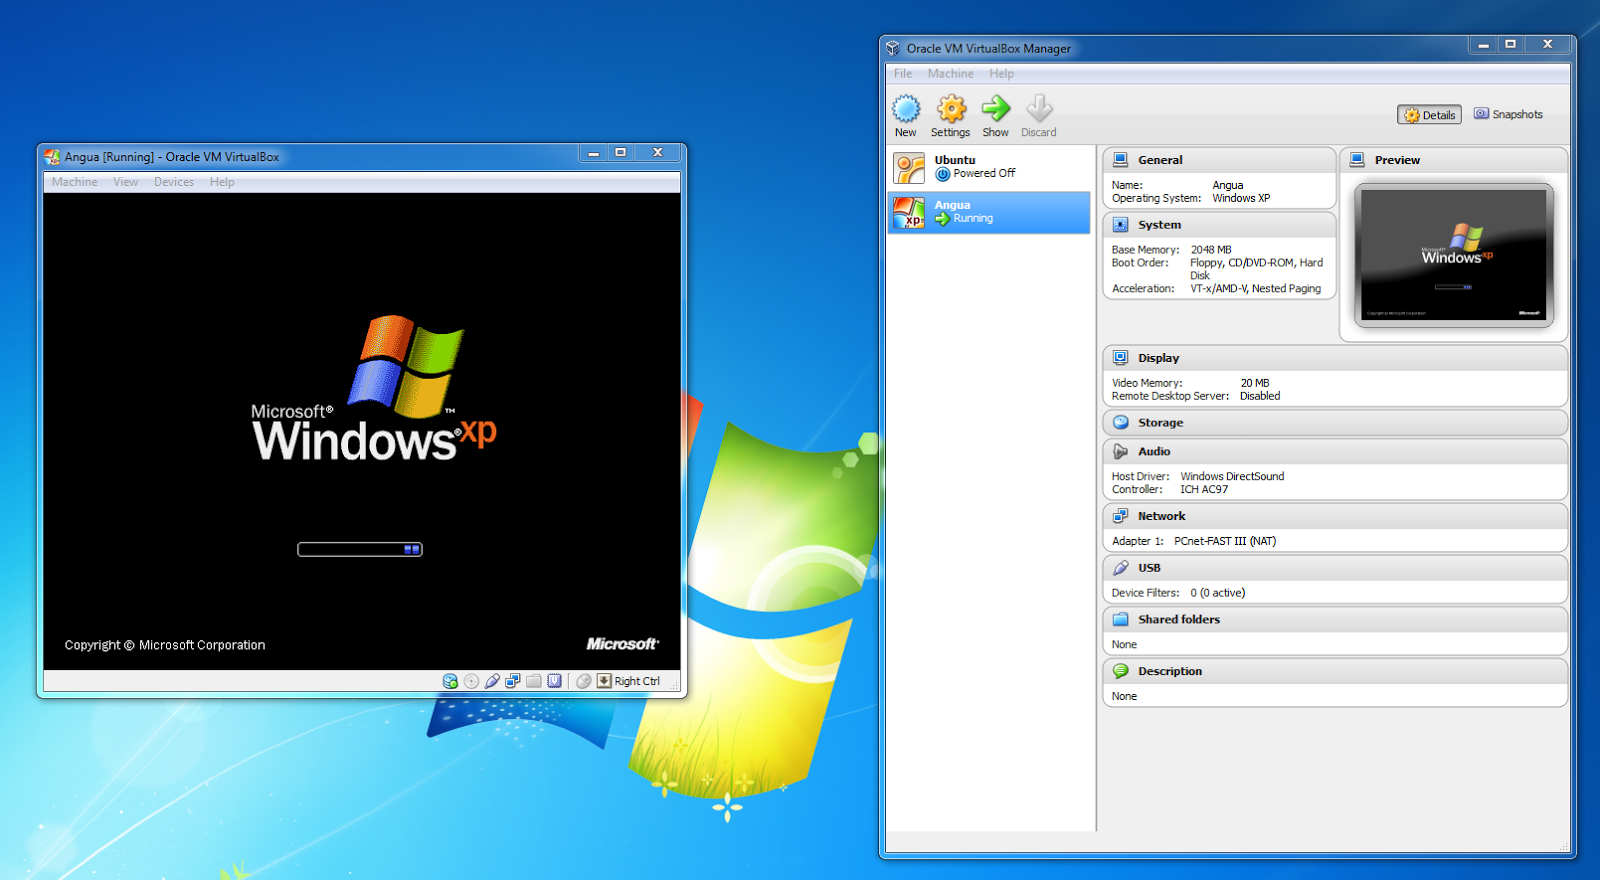 windows 95 vdi download for virtualbox